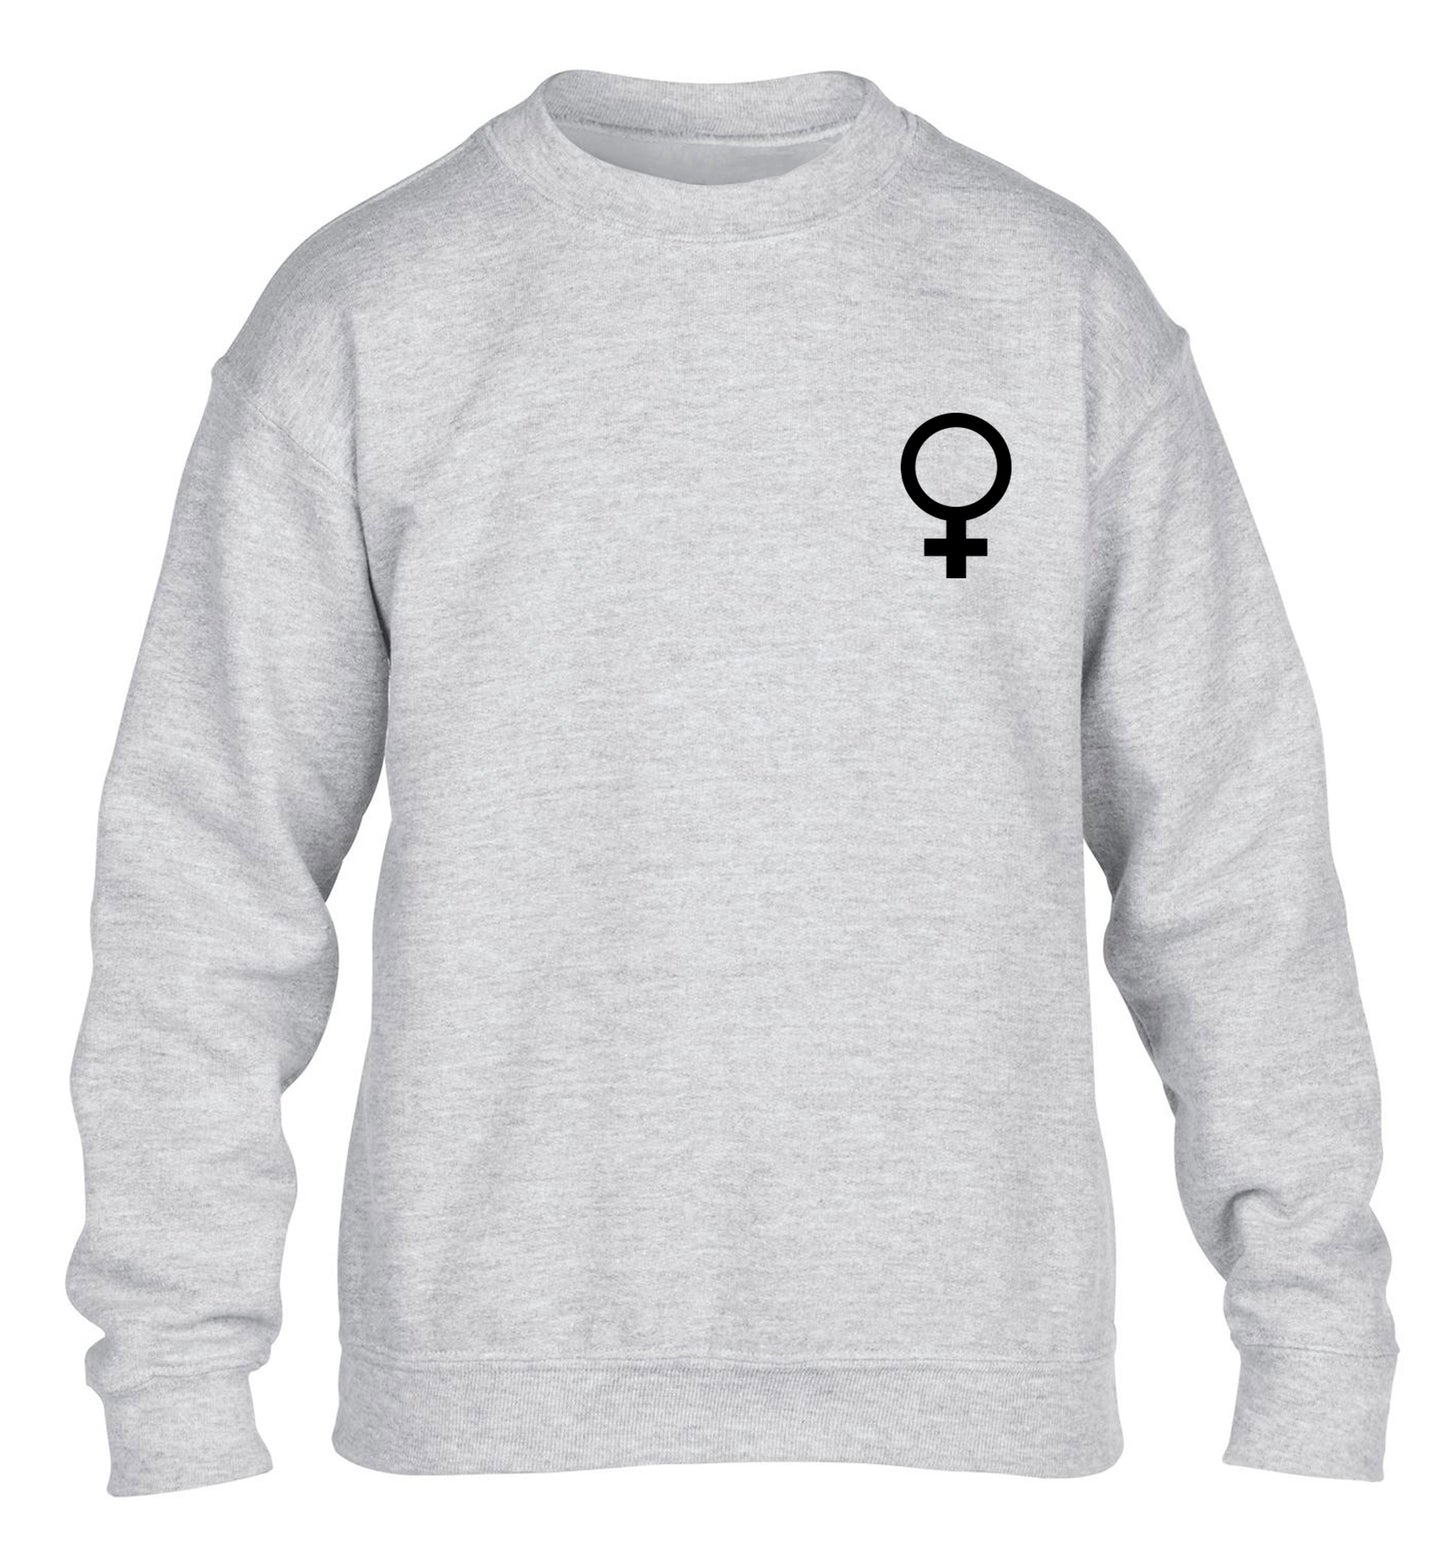 Female pocket symbol children's grey sweater 12-14 Years